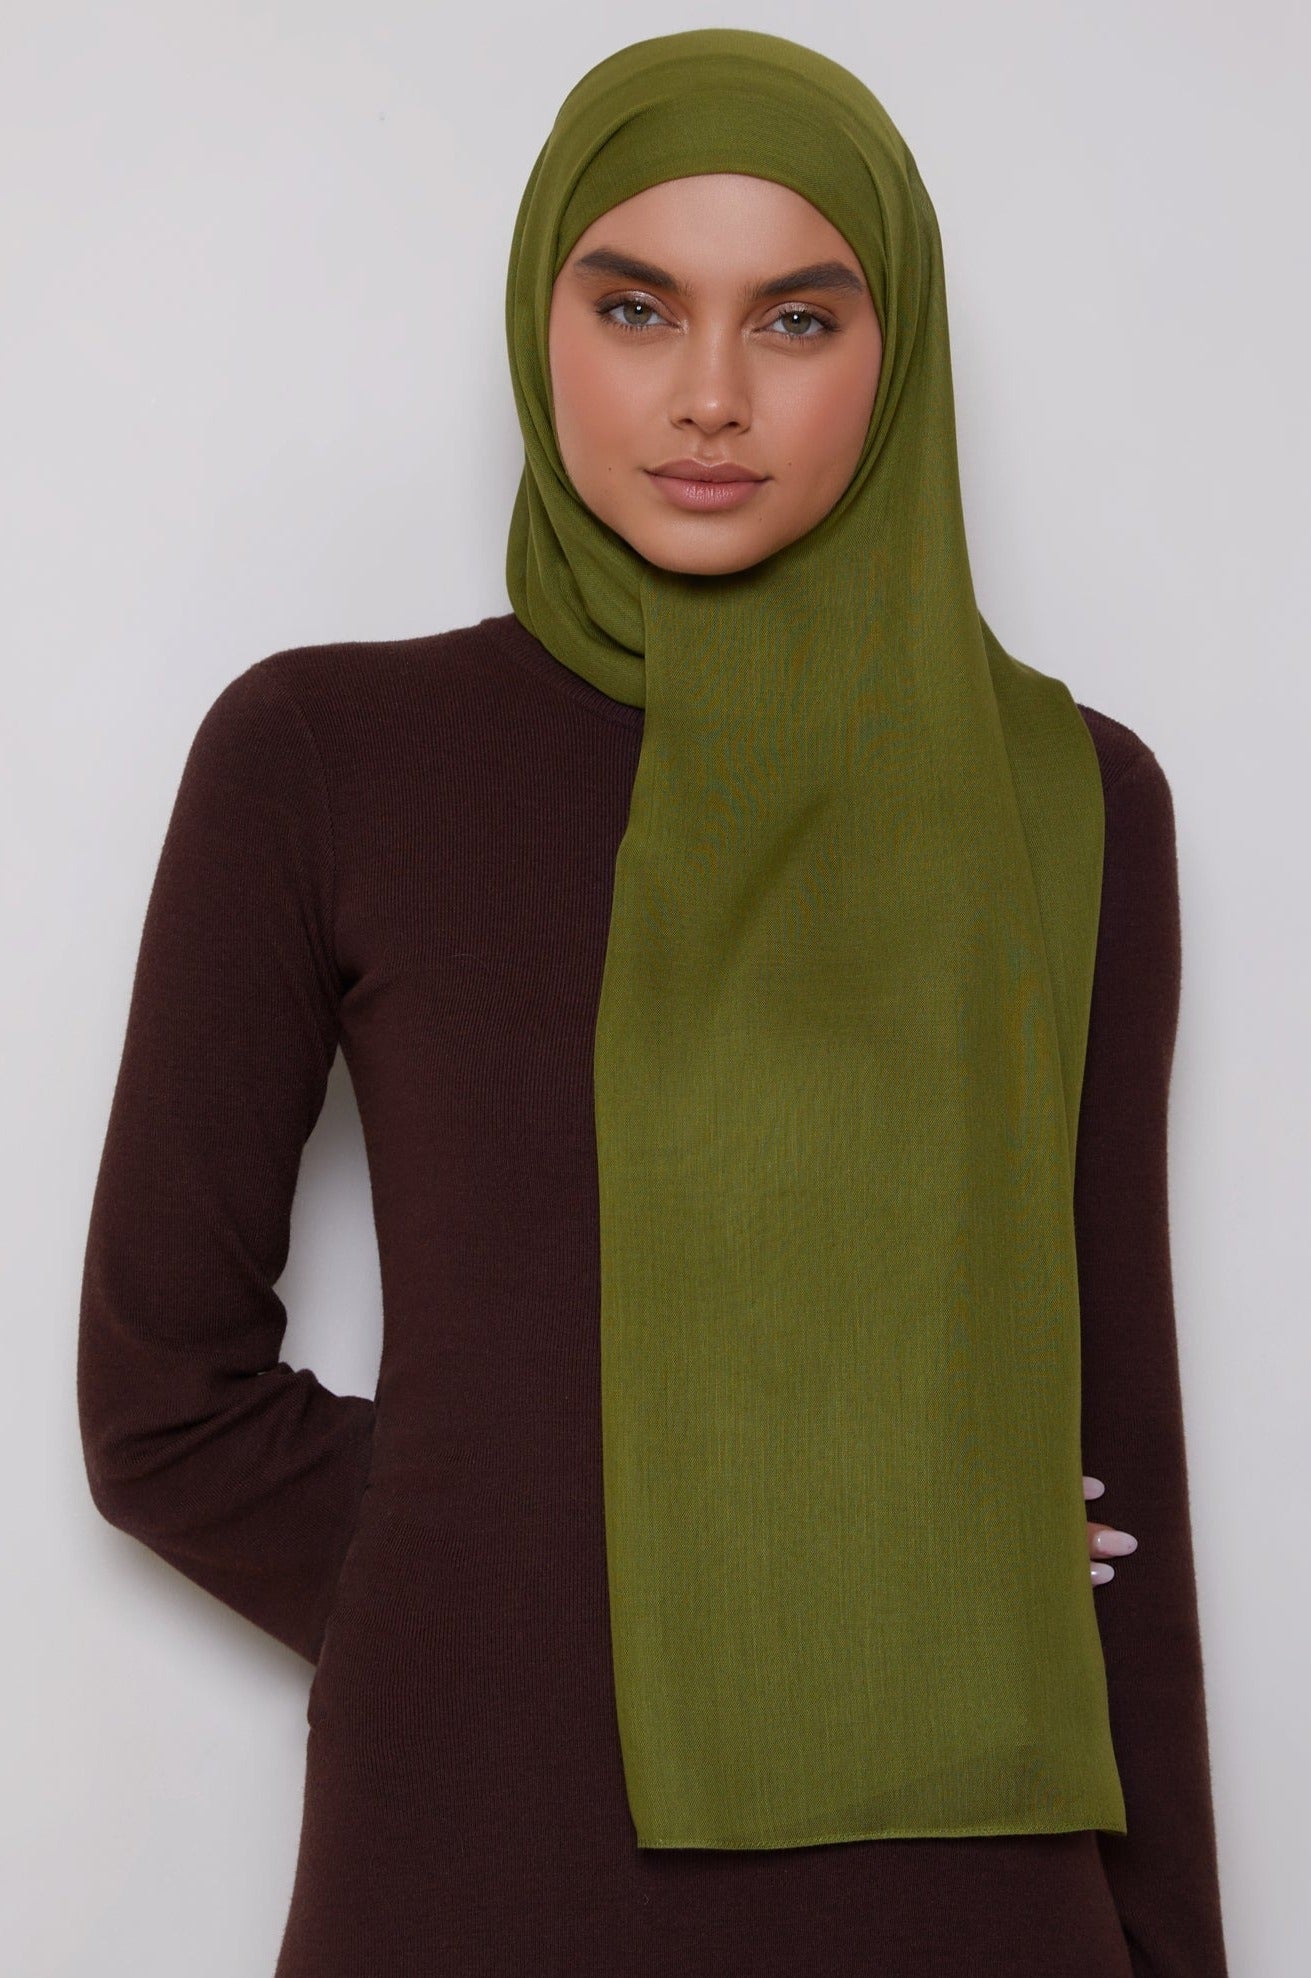 Modal Hijab - Avocado epschoolboard 